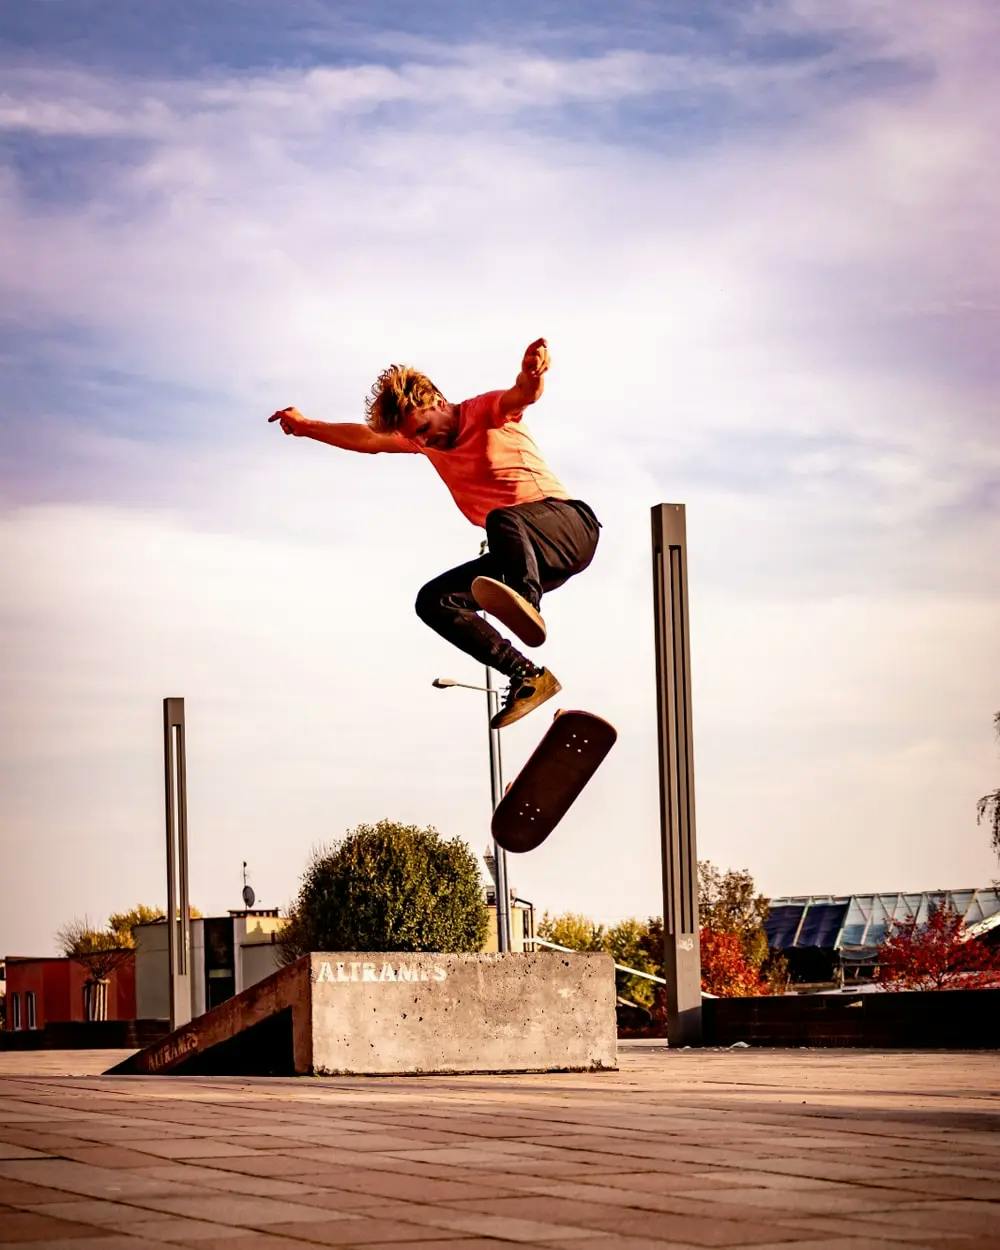 Jakub Pabis' friend - Bartosz Tytus Trojanowski doing big heelflip off the ramp - photo taken by Jakub Pabis